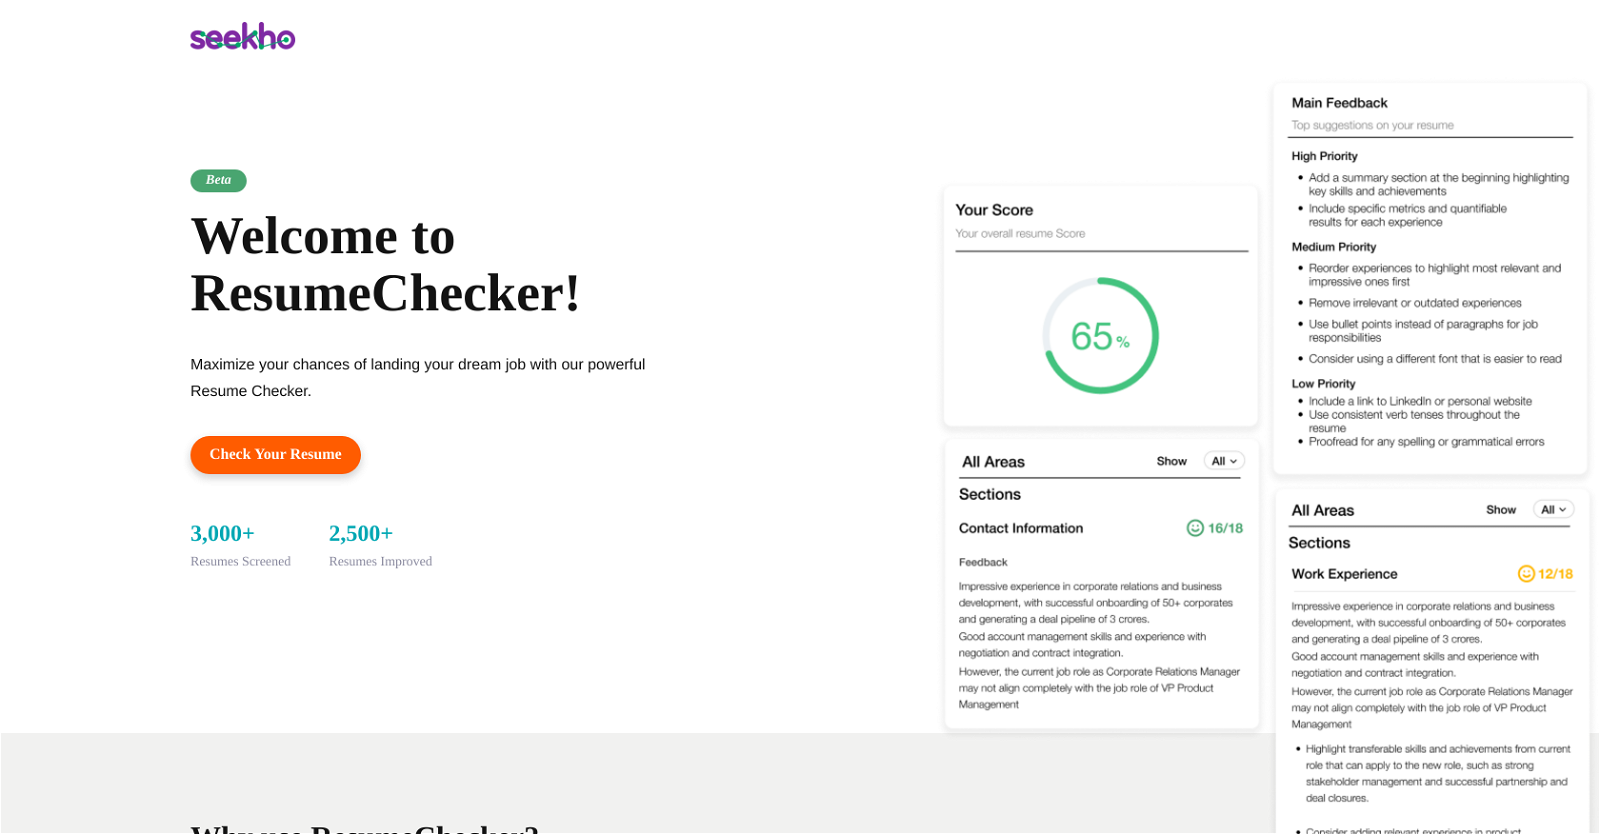 Seekho Resume Checker website